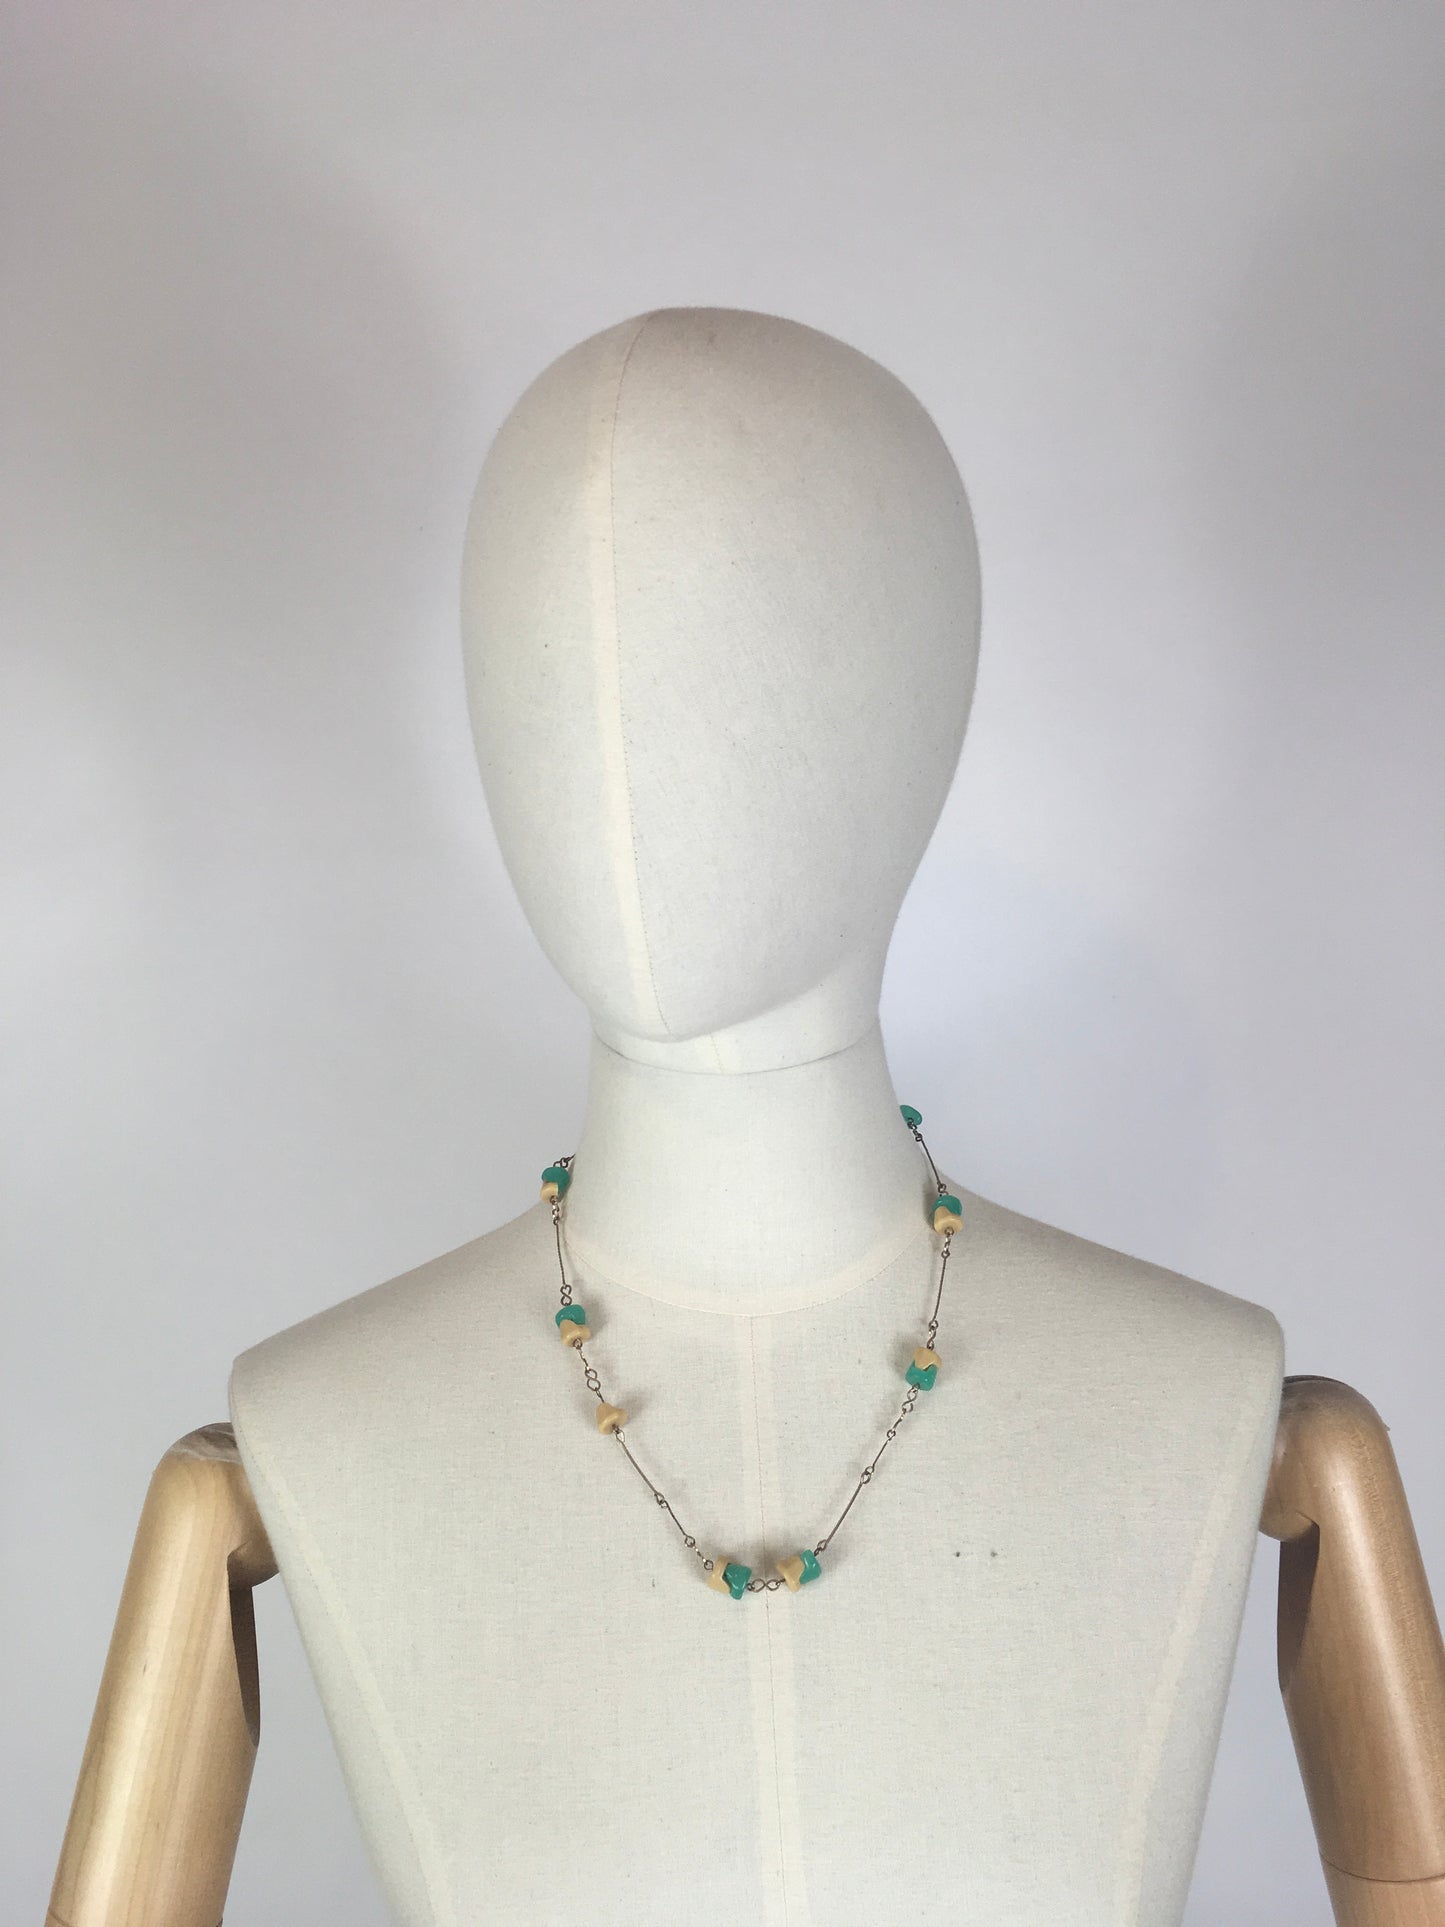 Original 1930’s Deco Necklace - In Turquoise Blue, Cream & Silver